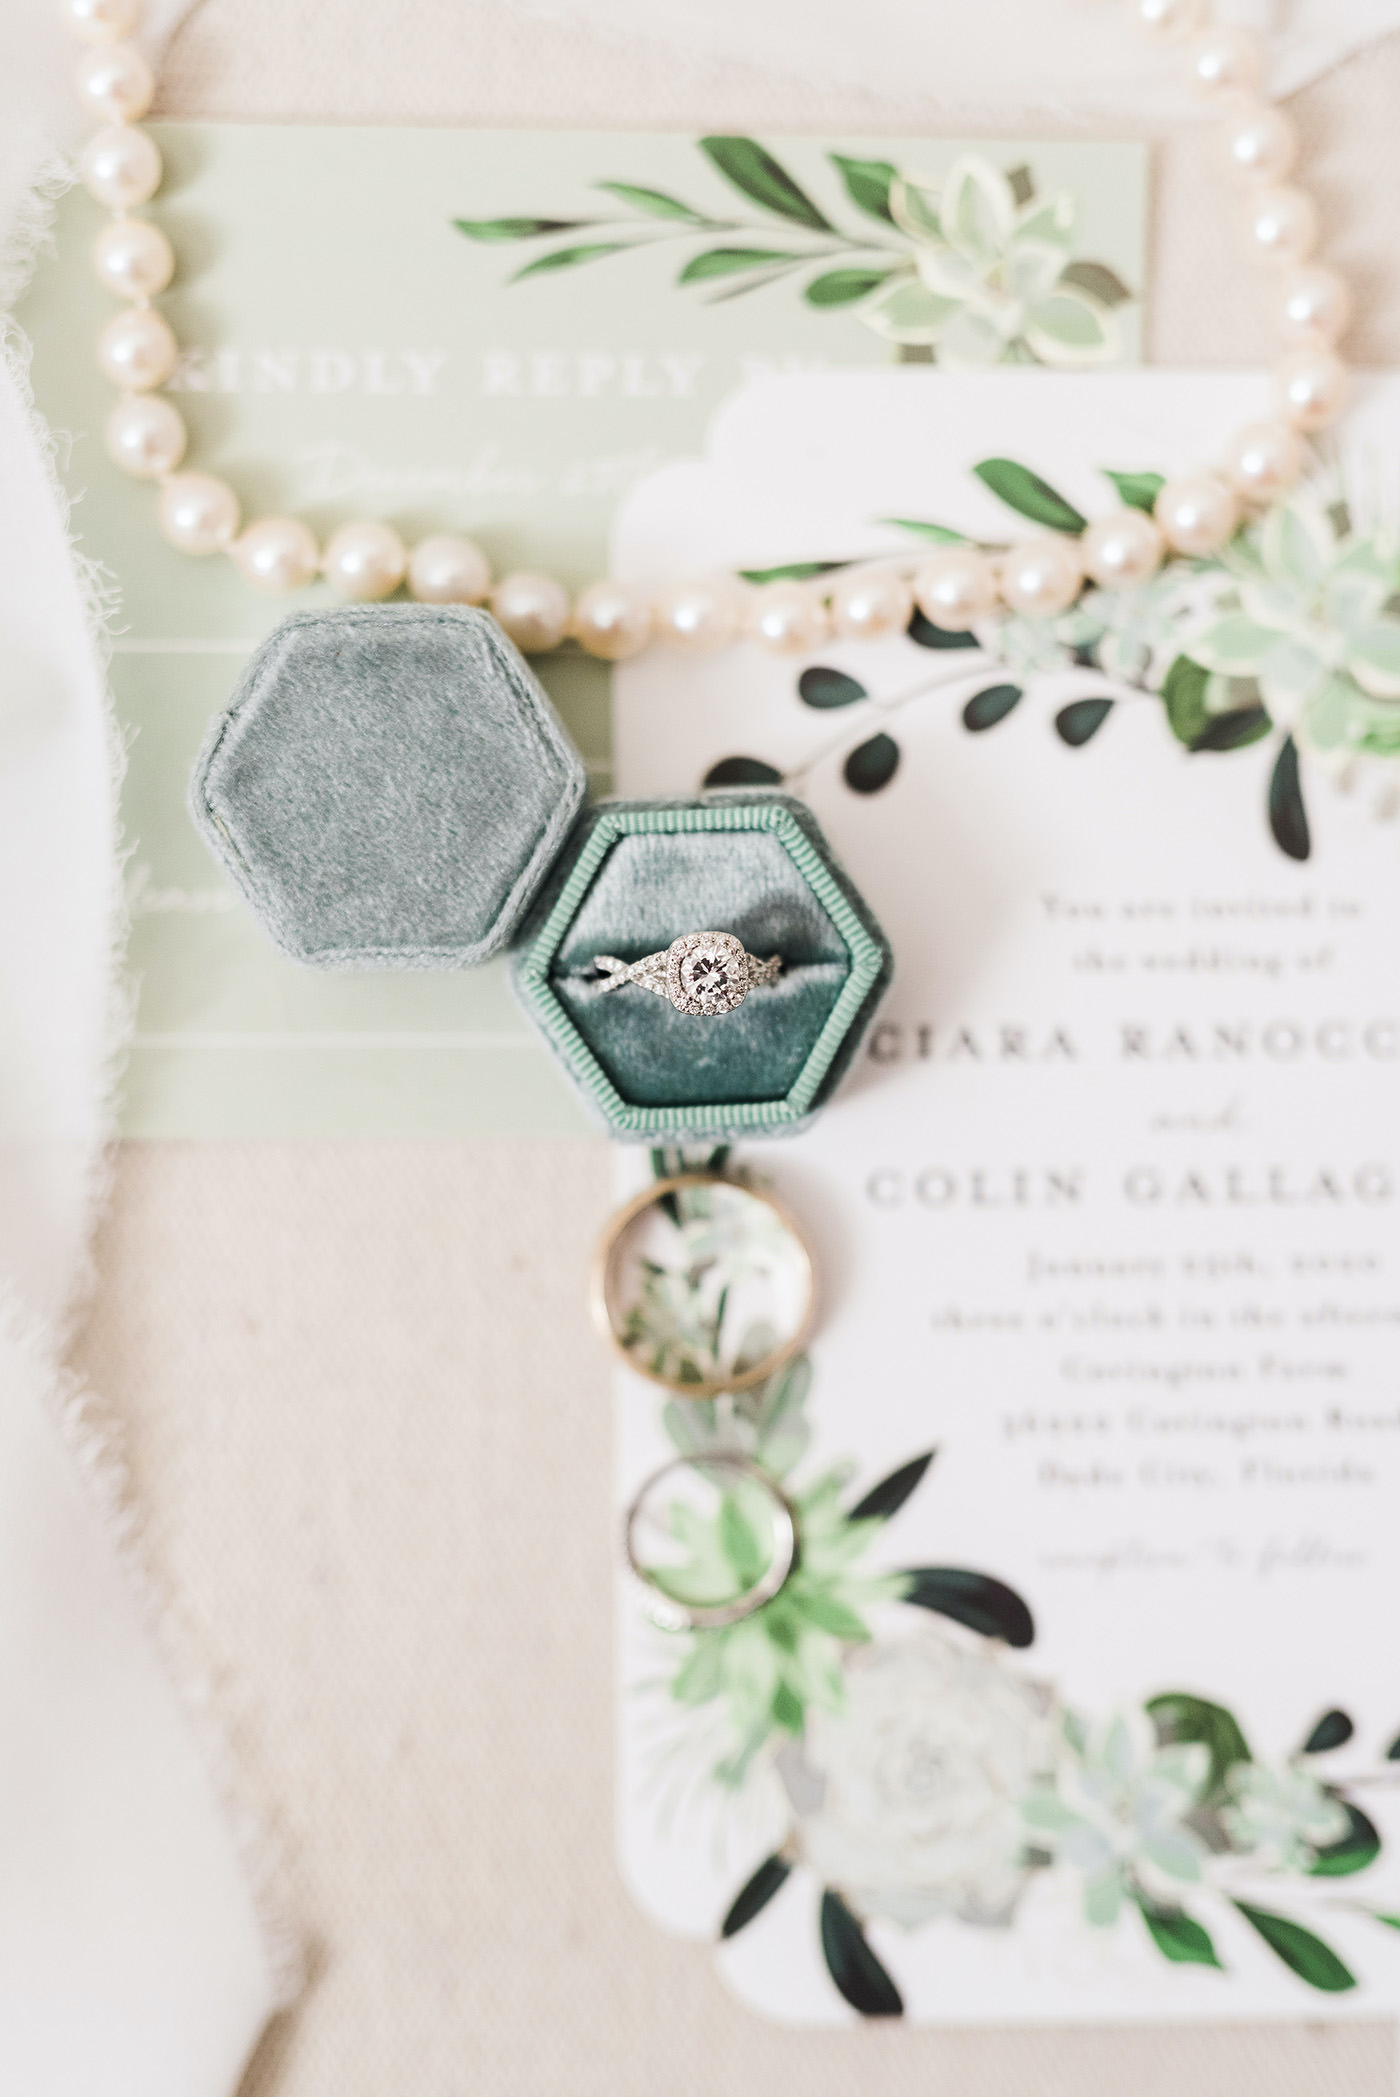 Vintage Inspired Wedding and Engagement Ring, in Velvet Sage Green Ringbox | Florida Wedding Planner and Designer John Campbell Weddings